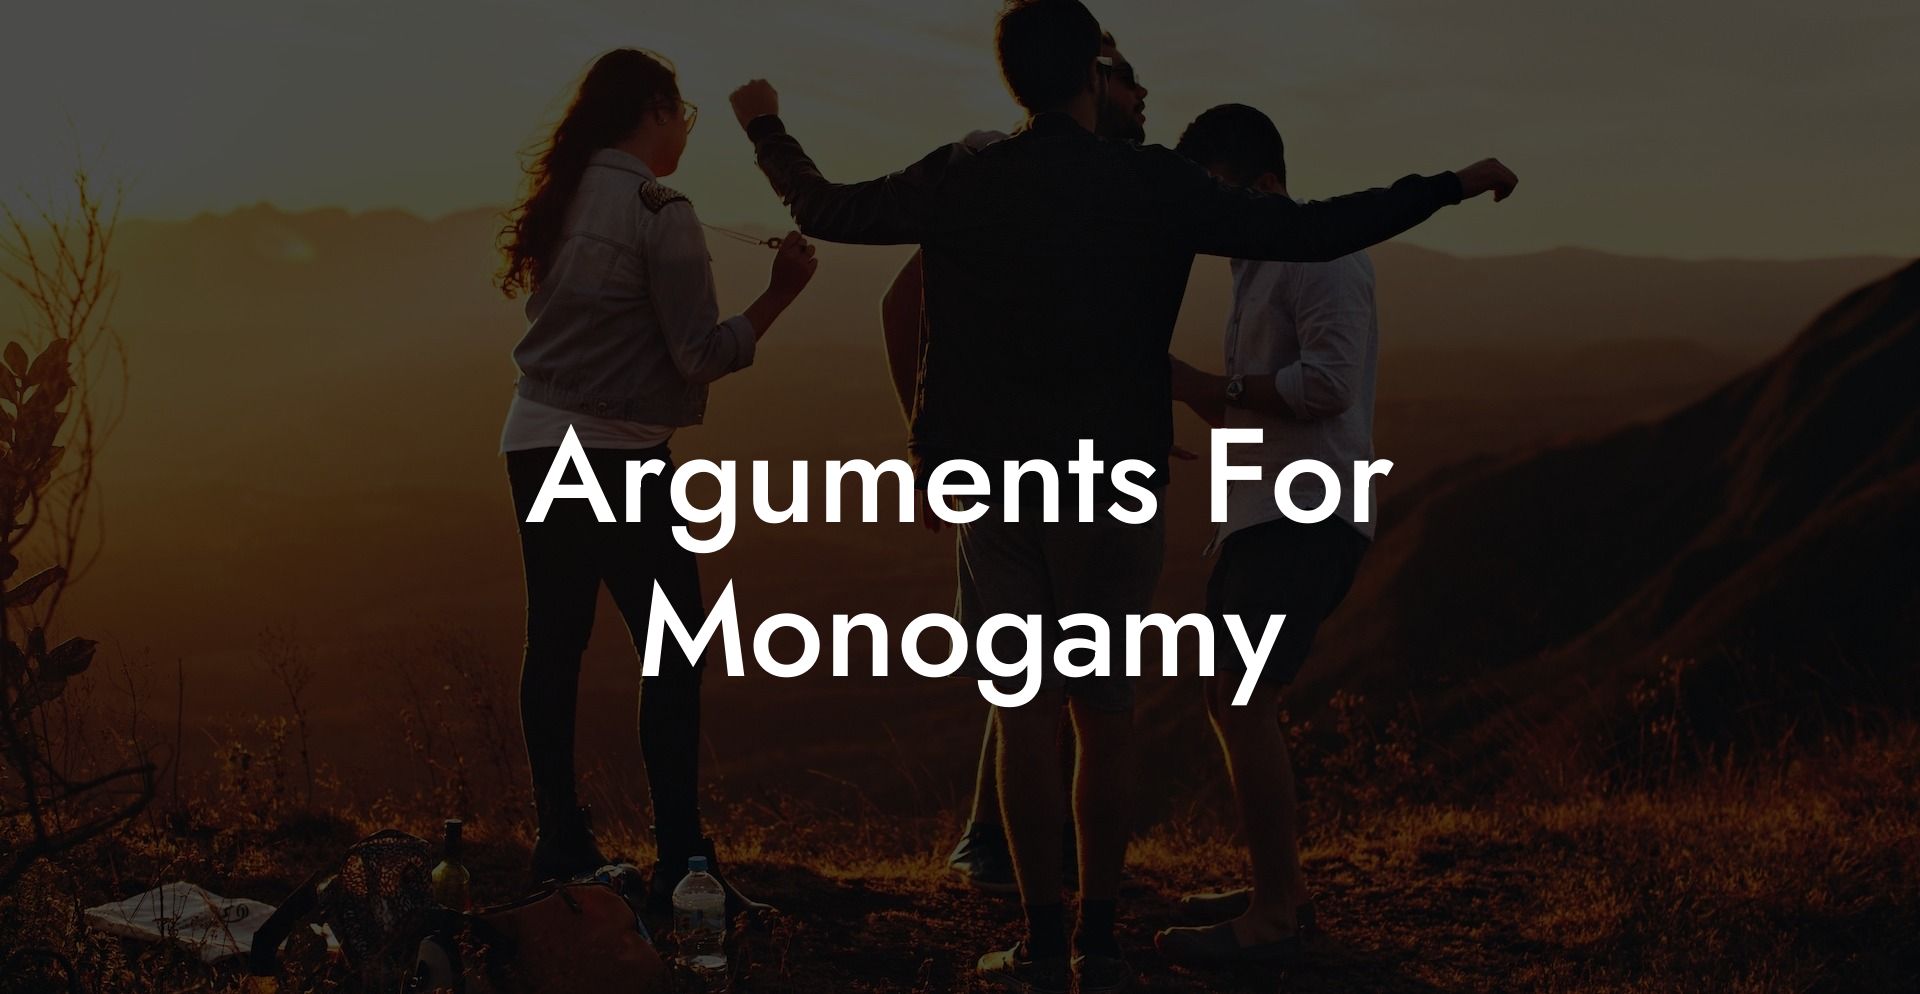 Arguments For Monogamy